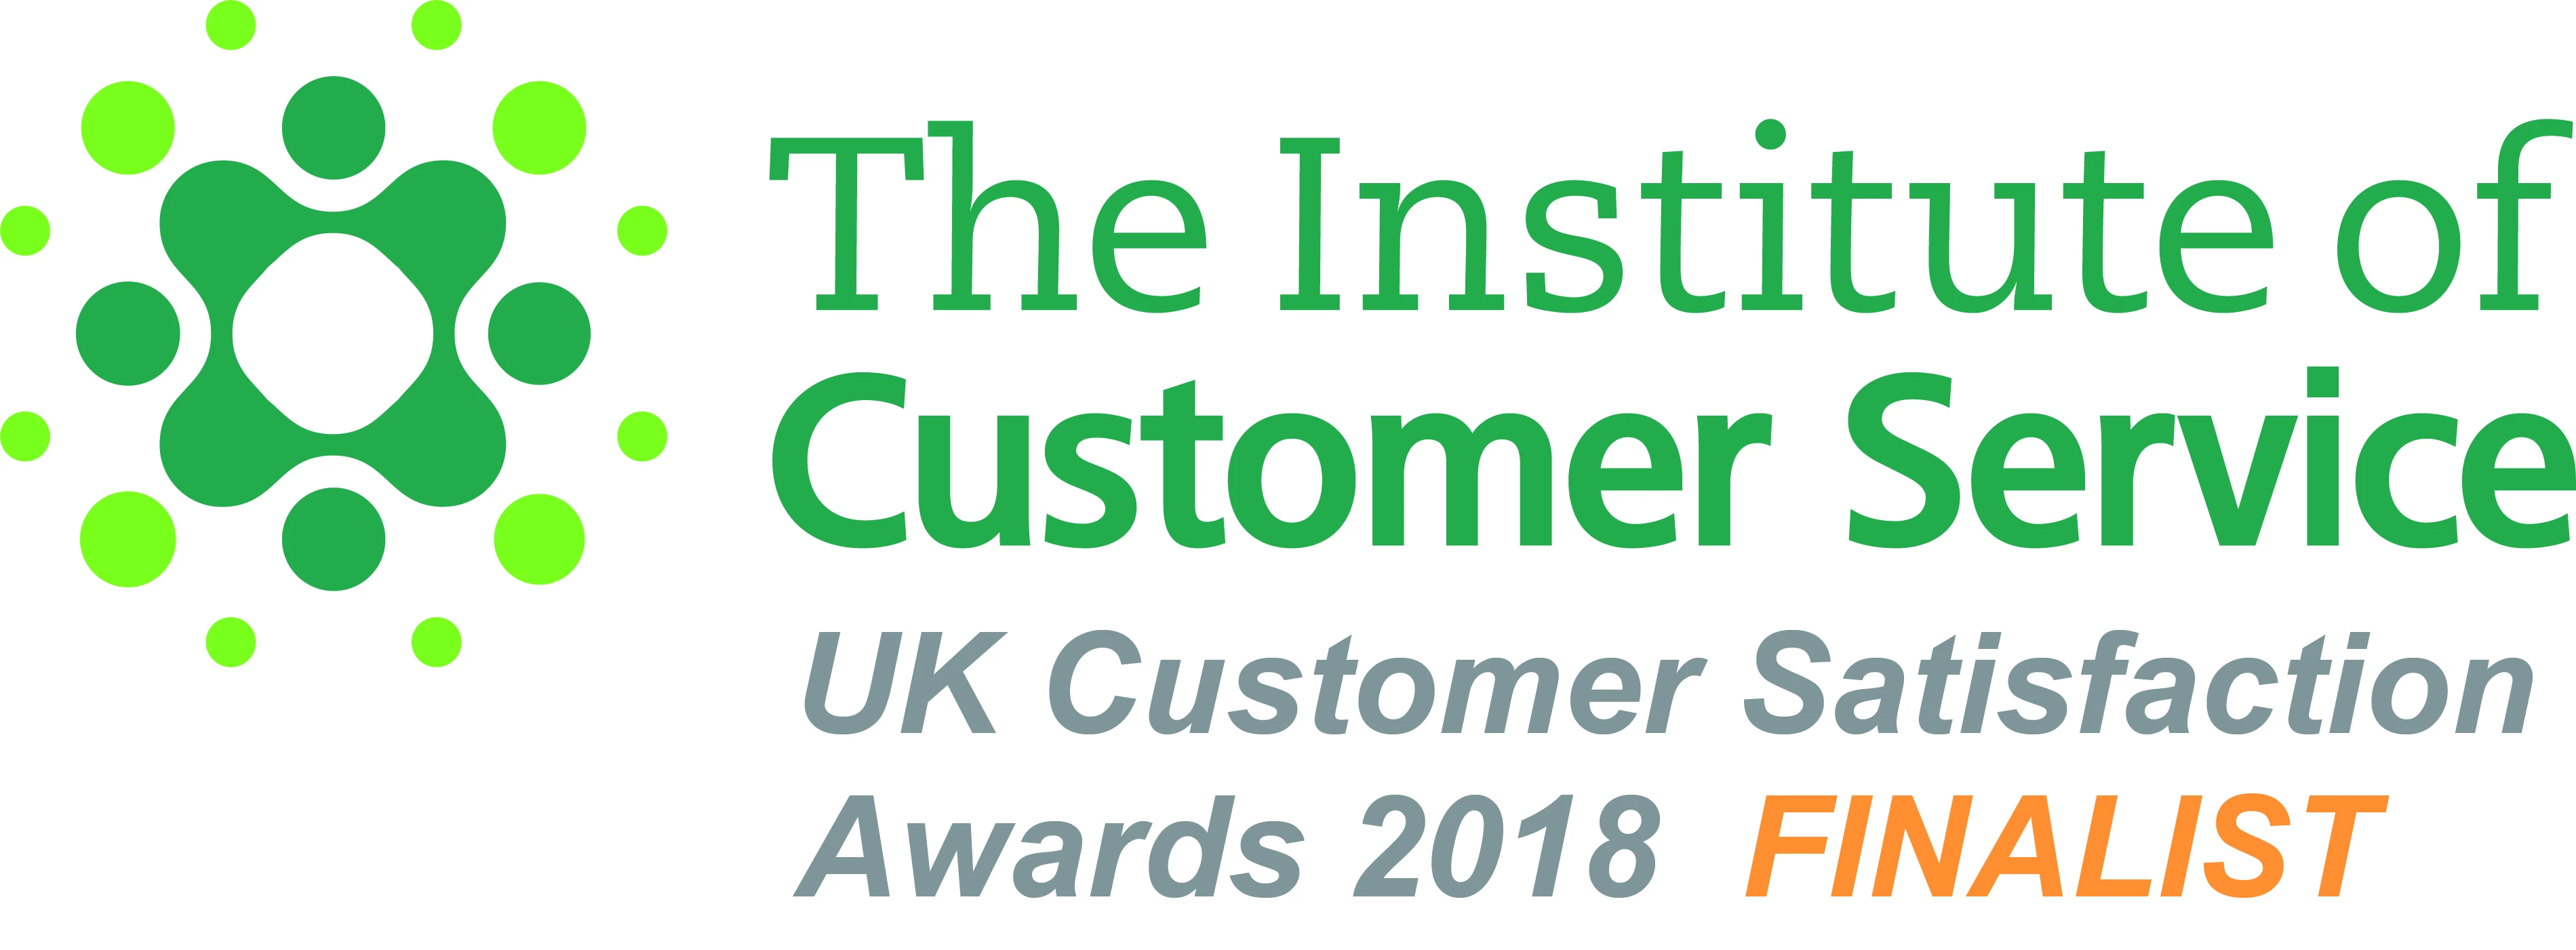 UK Customer Service wards 2018 finalist